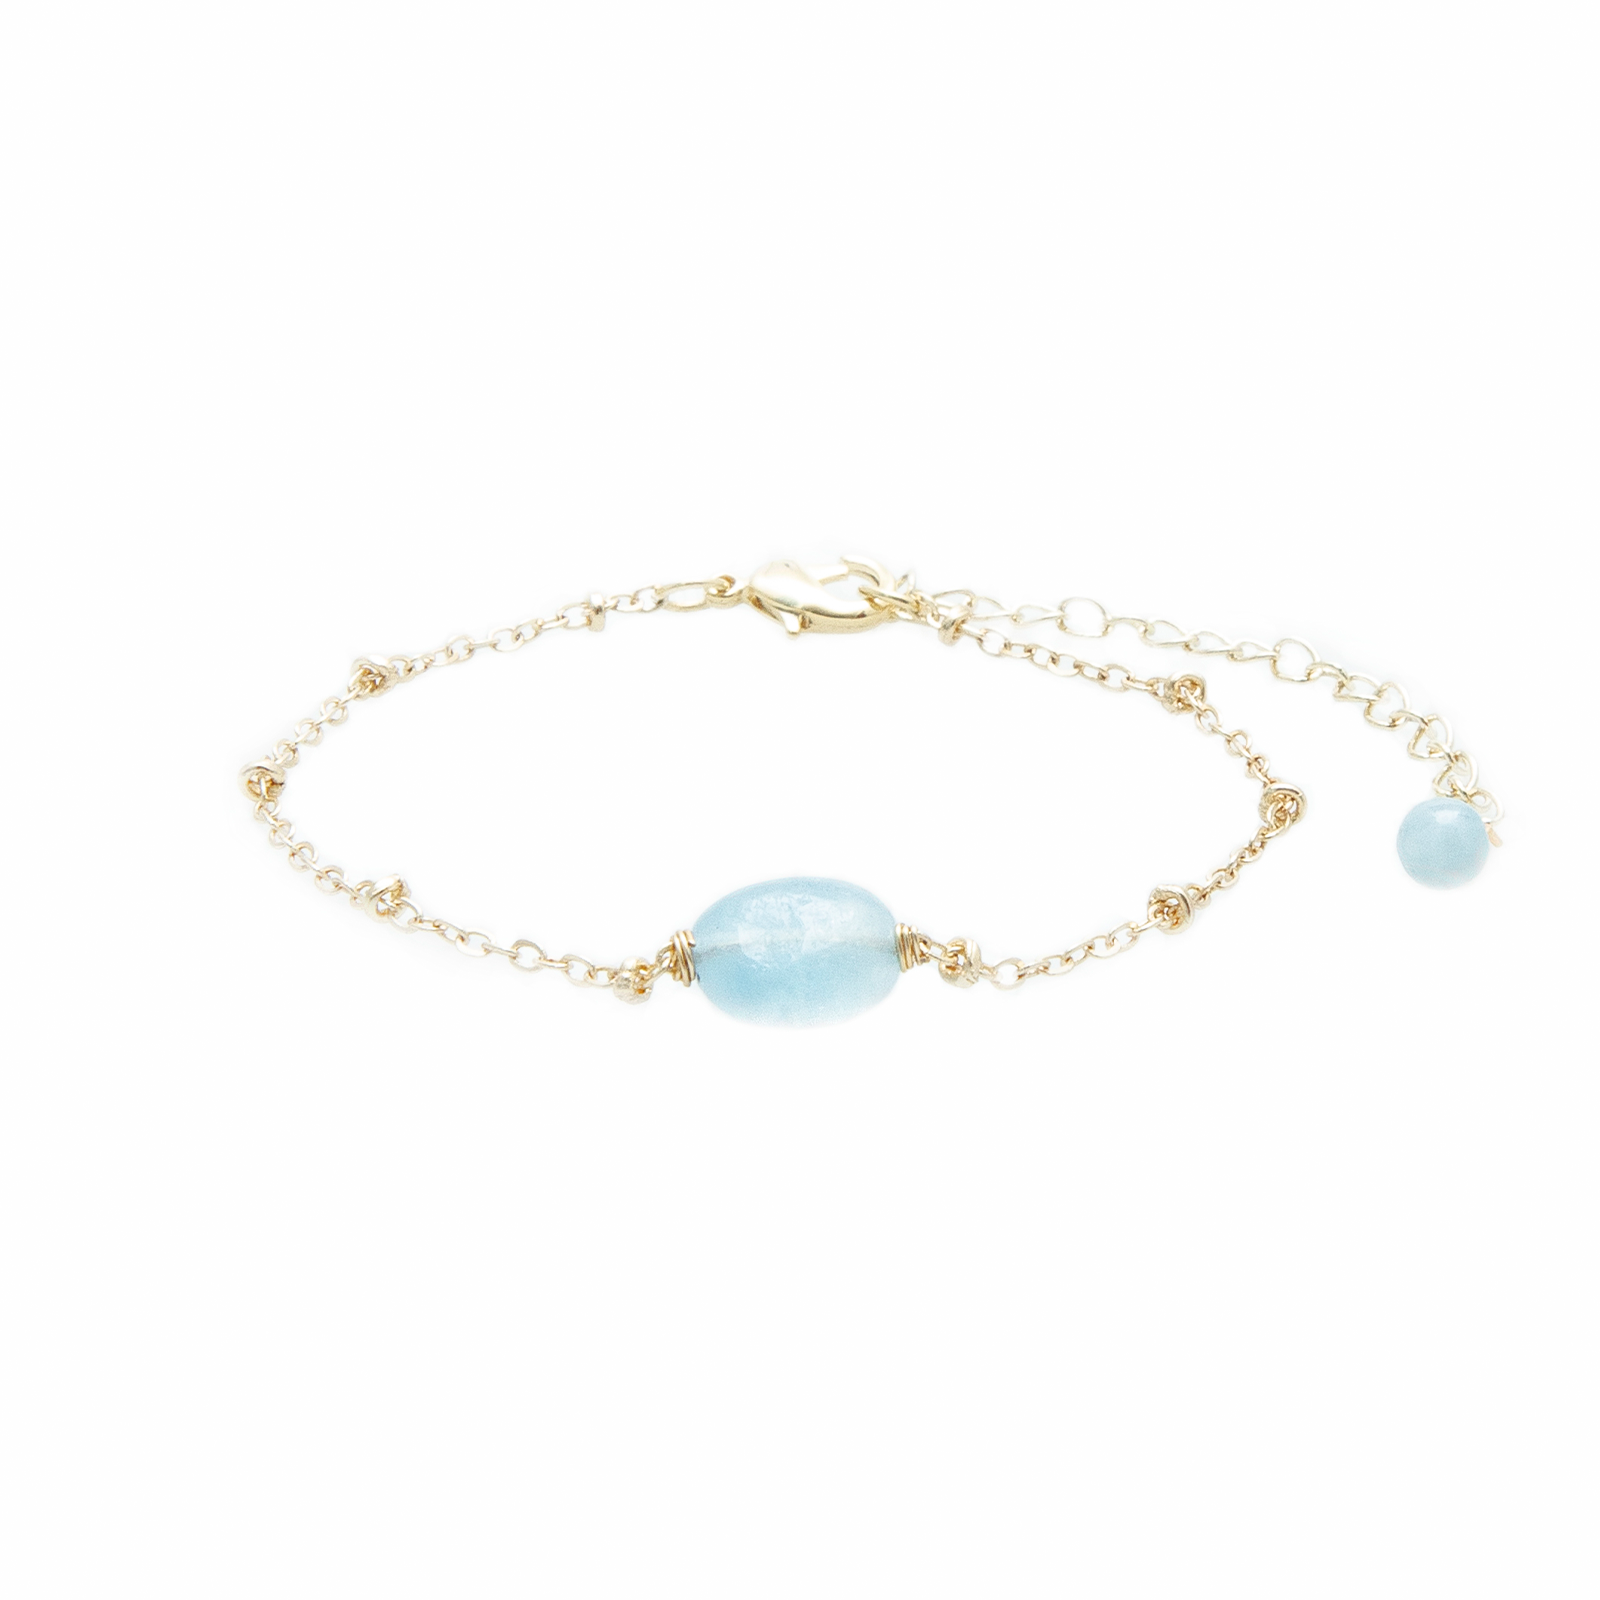 Aquamarine Bracelet - LotusAndLuna